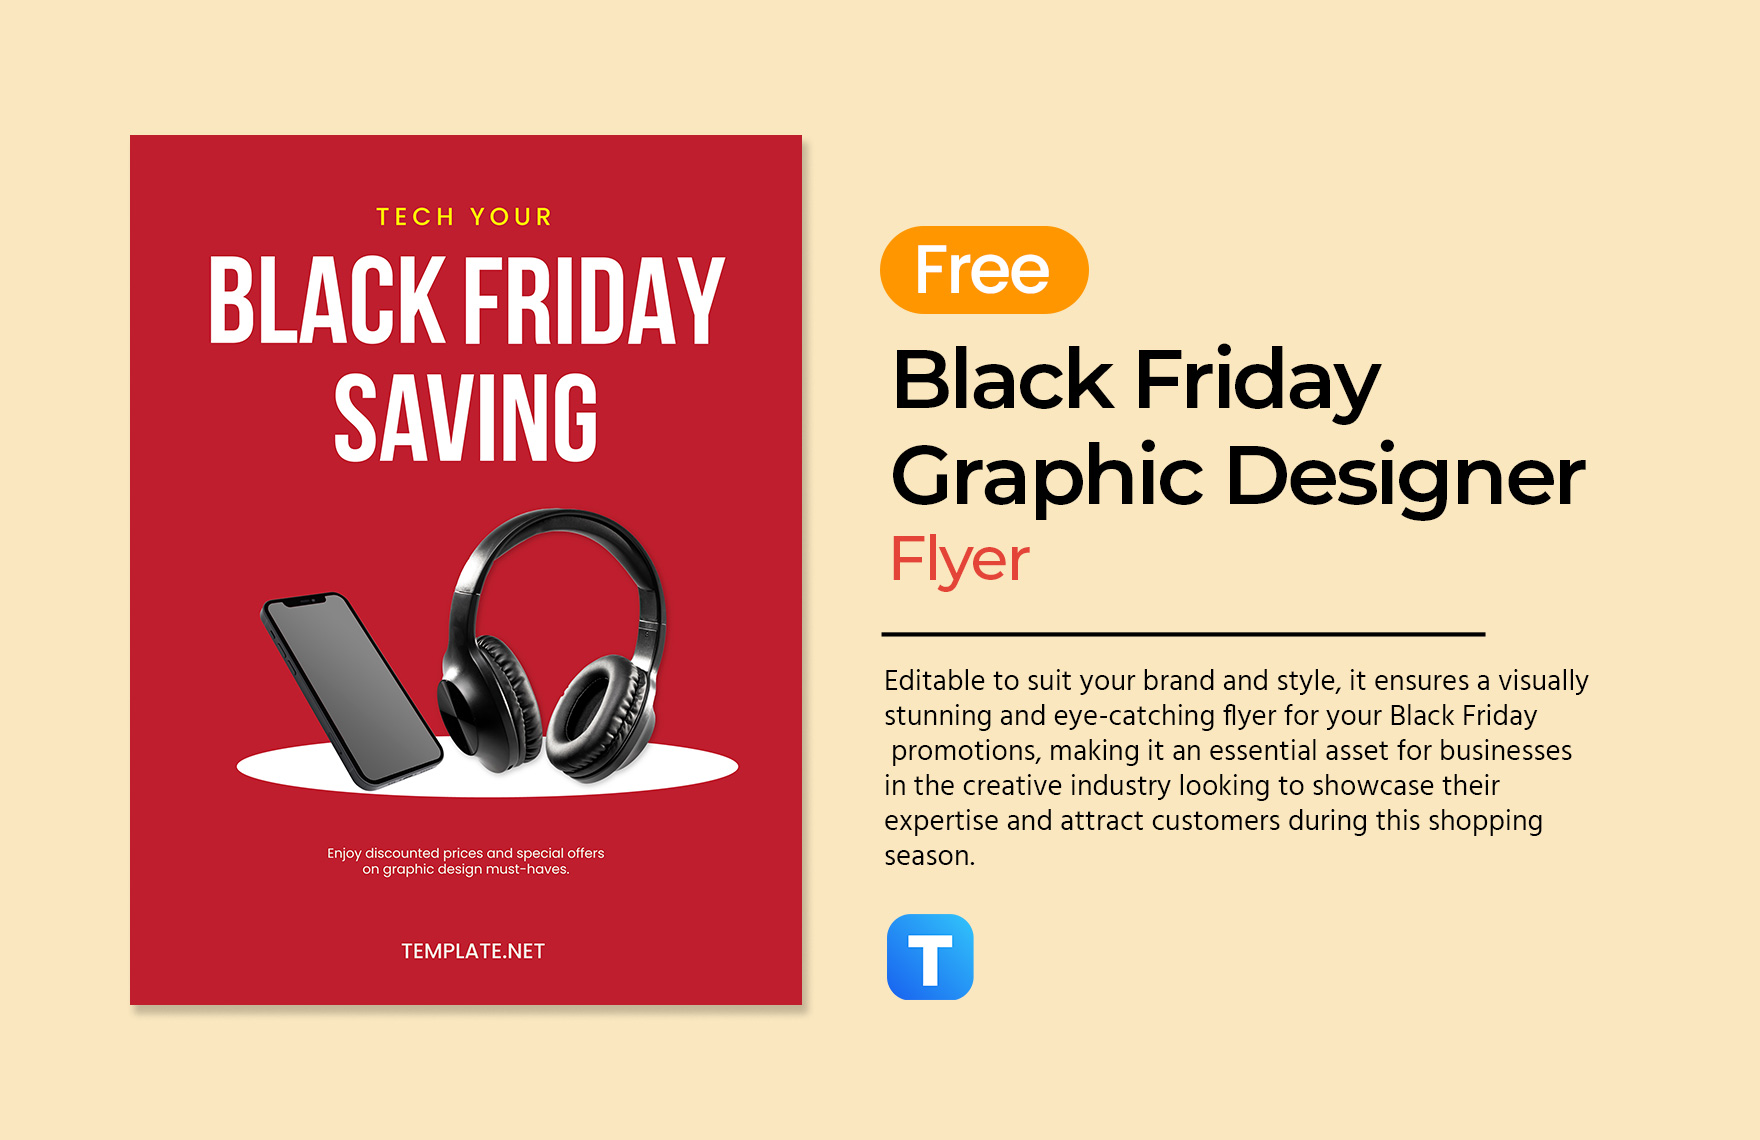 Black Friday Graphic Designer Flyer